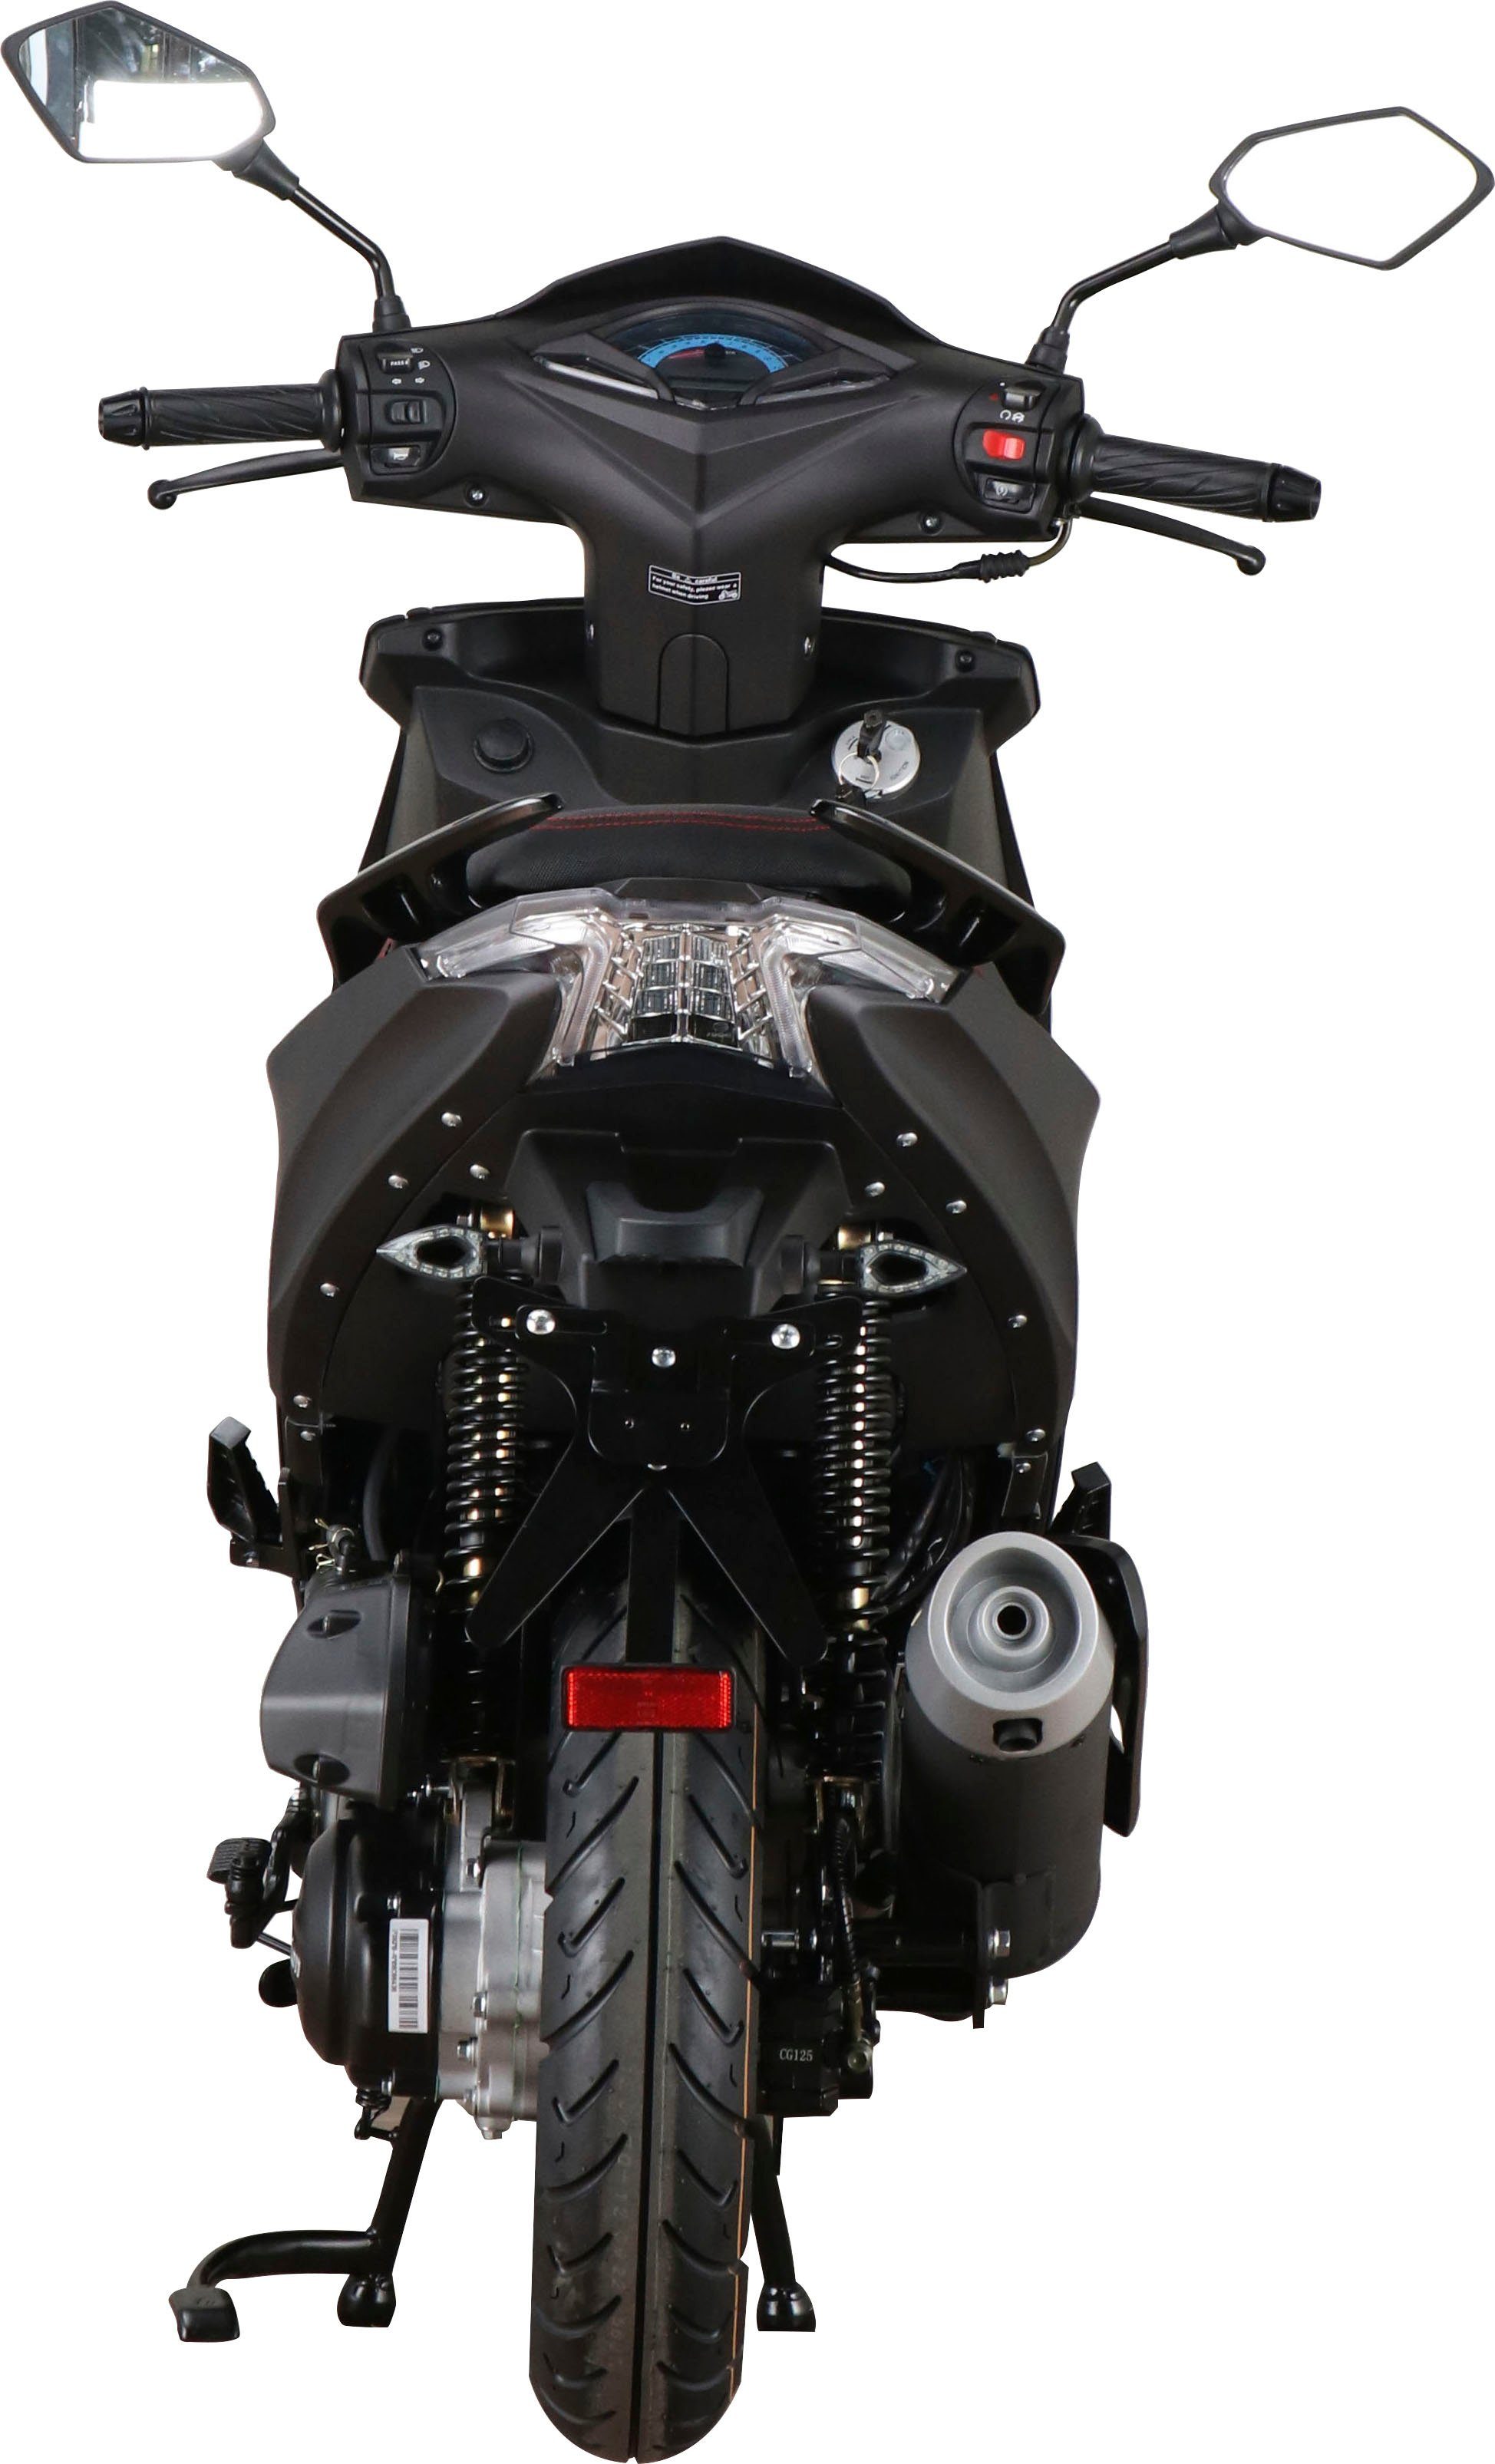 GT UNION Motorroller Striker, schwarz 45 ccm, 5 Euro 50 km/h